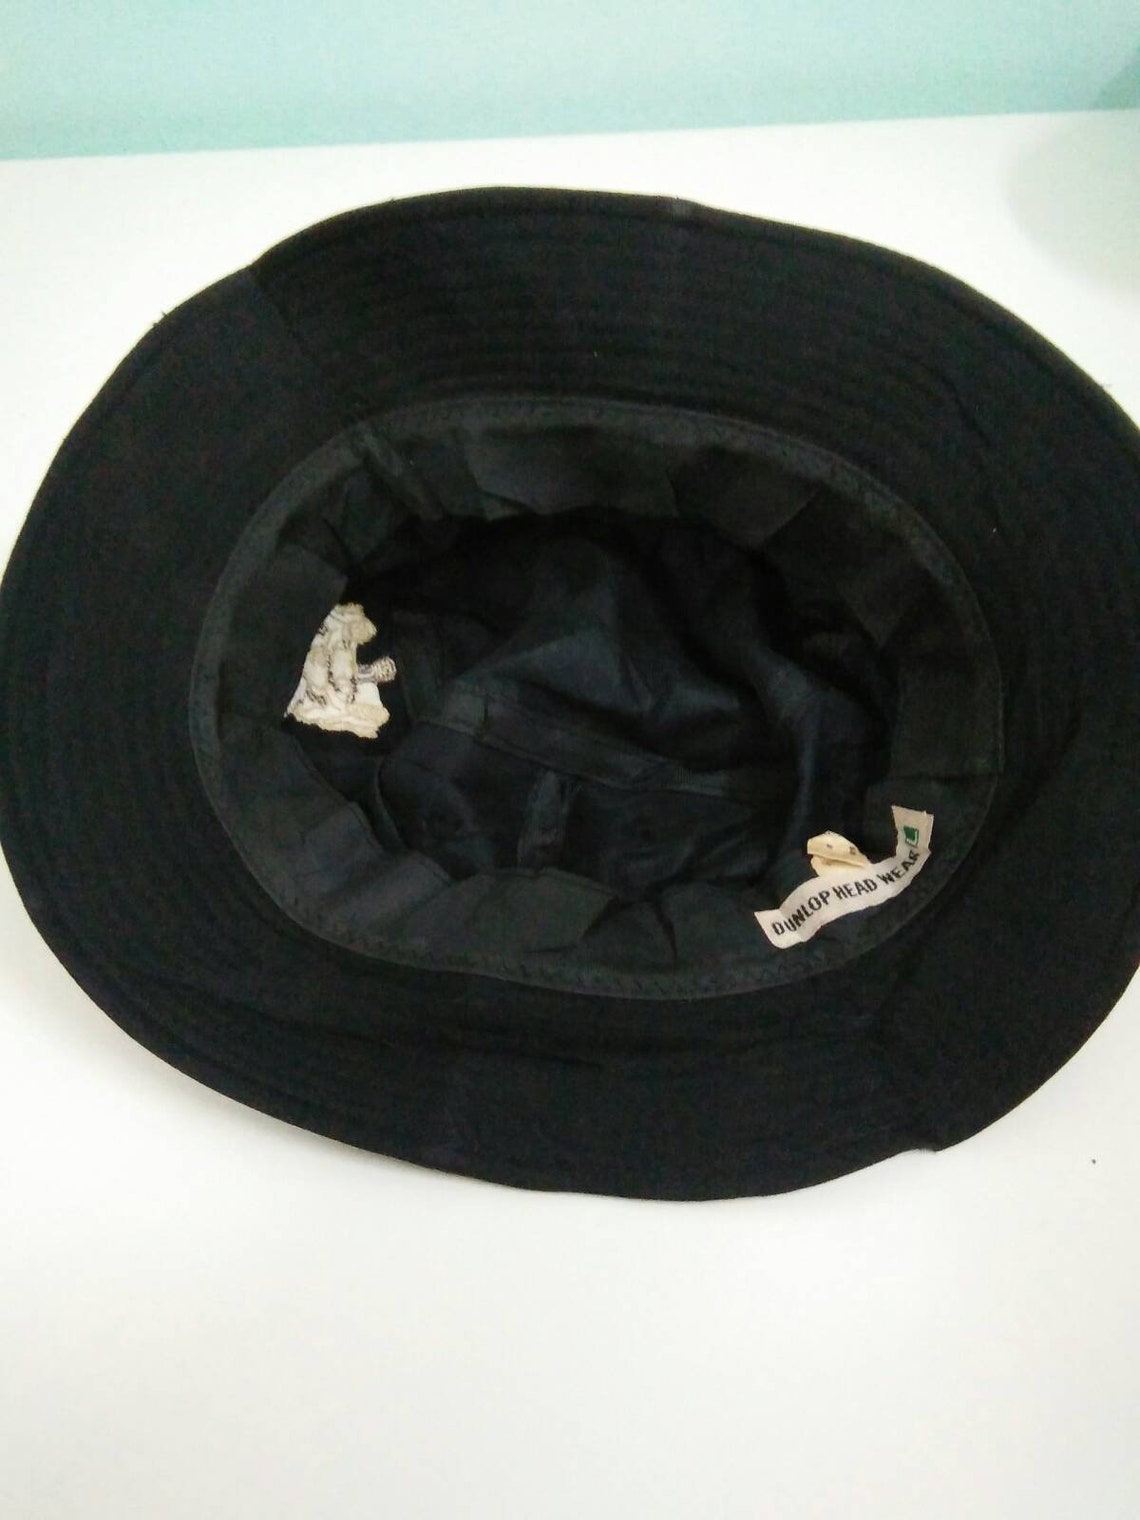 Rare Vintage DUNLOP Bucket Hat Dunlop Hat Dunlop Headwear - Etsy